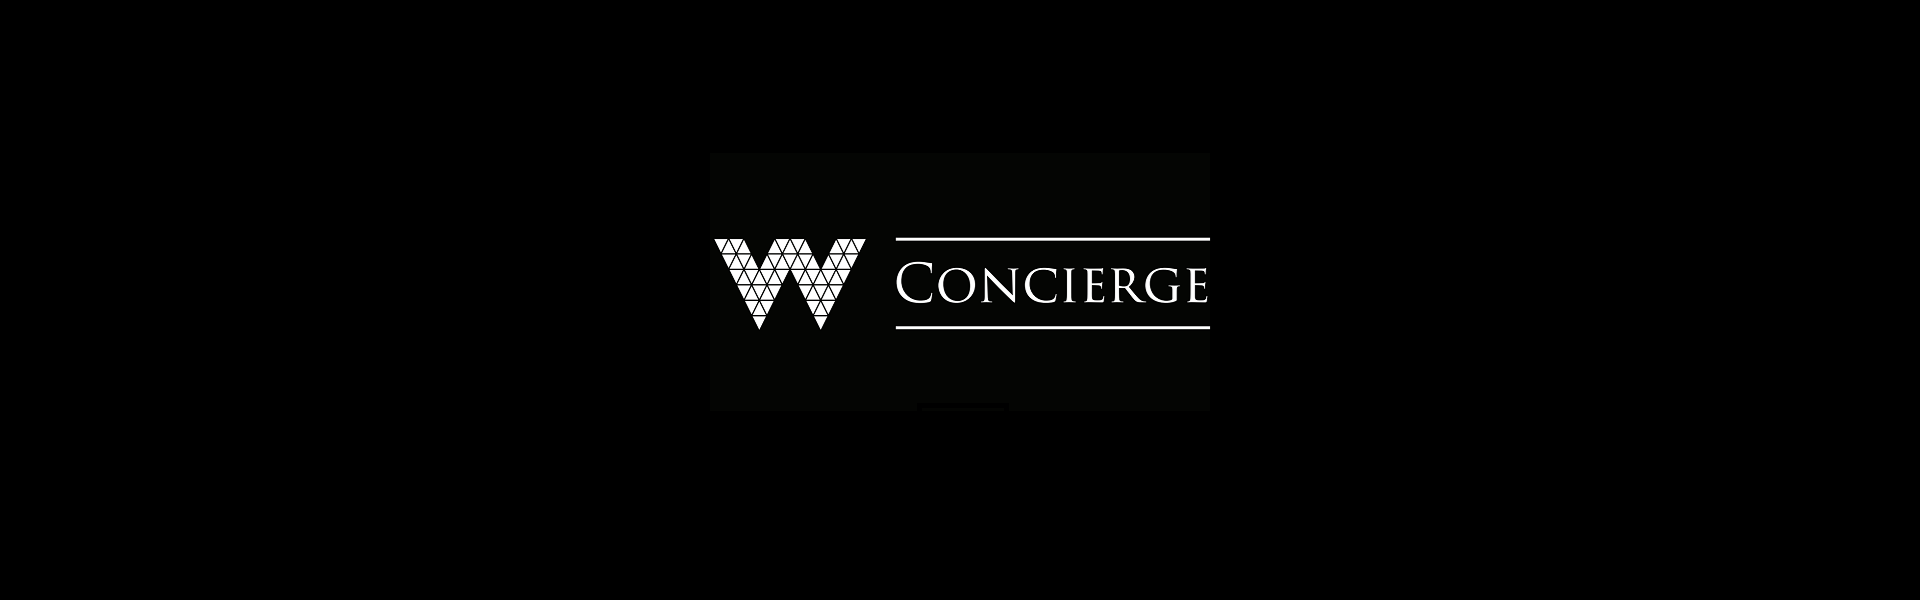 WEM Concierge